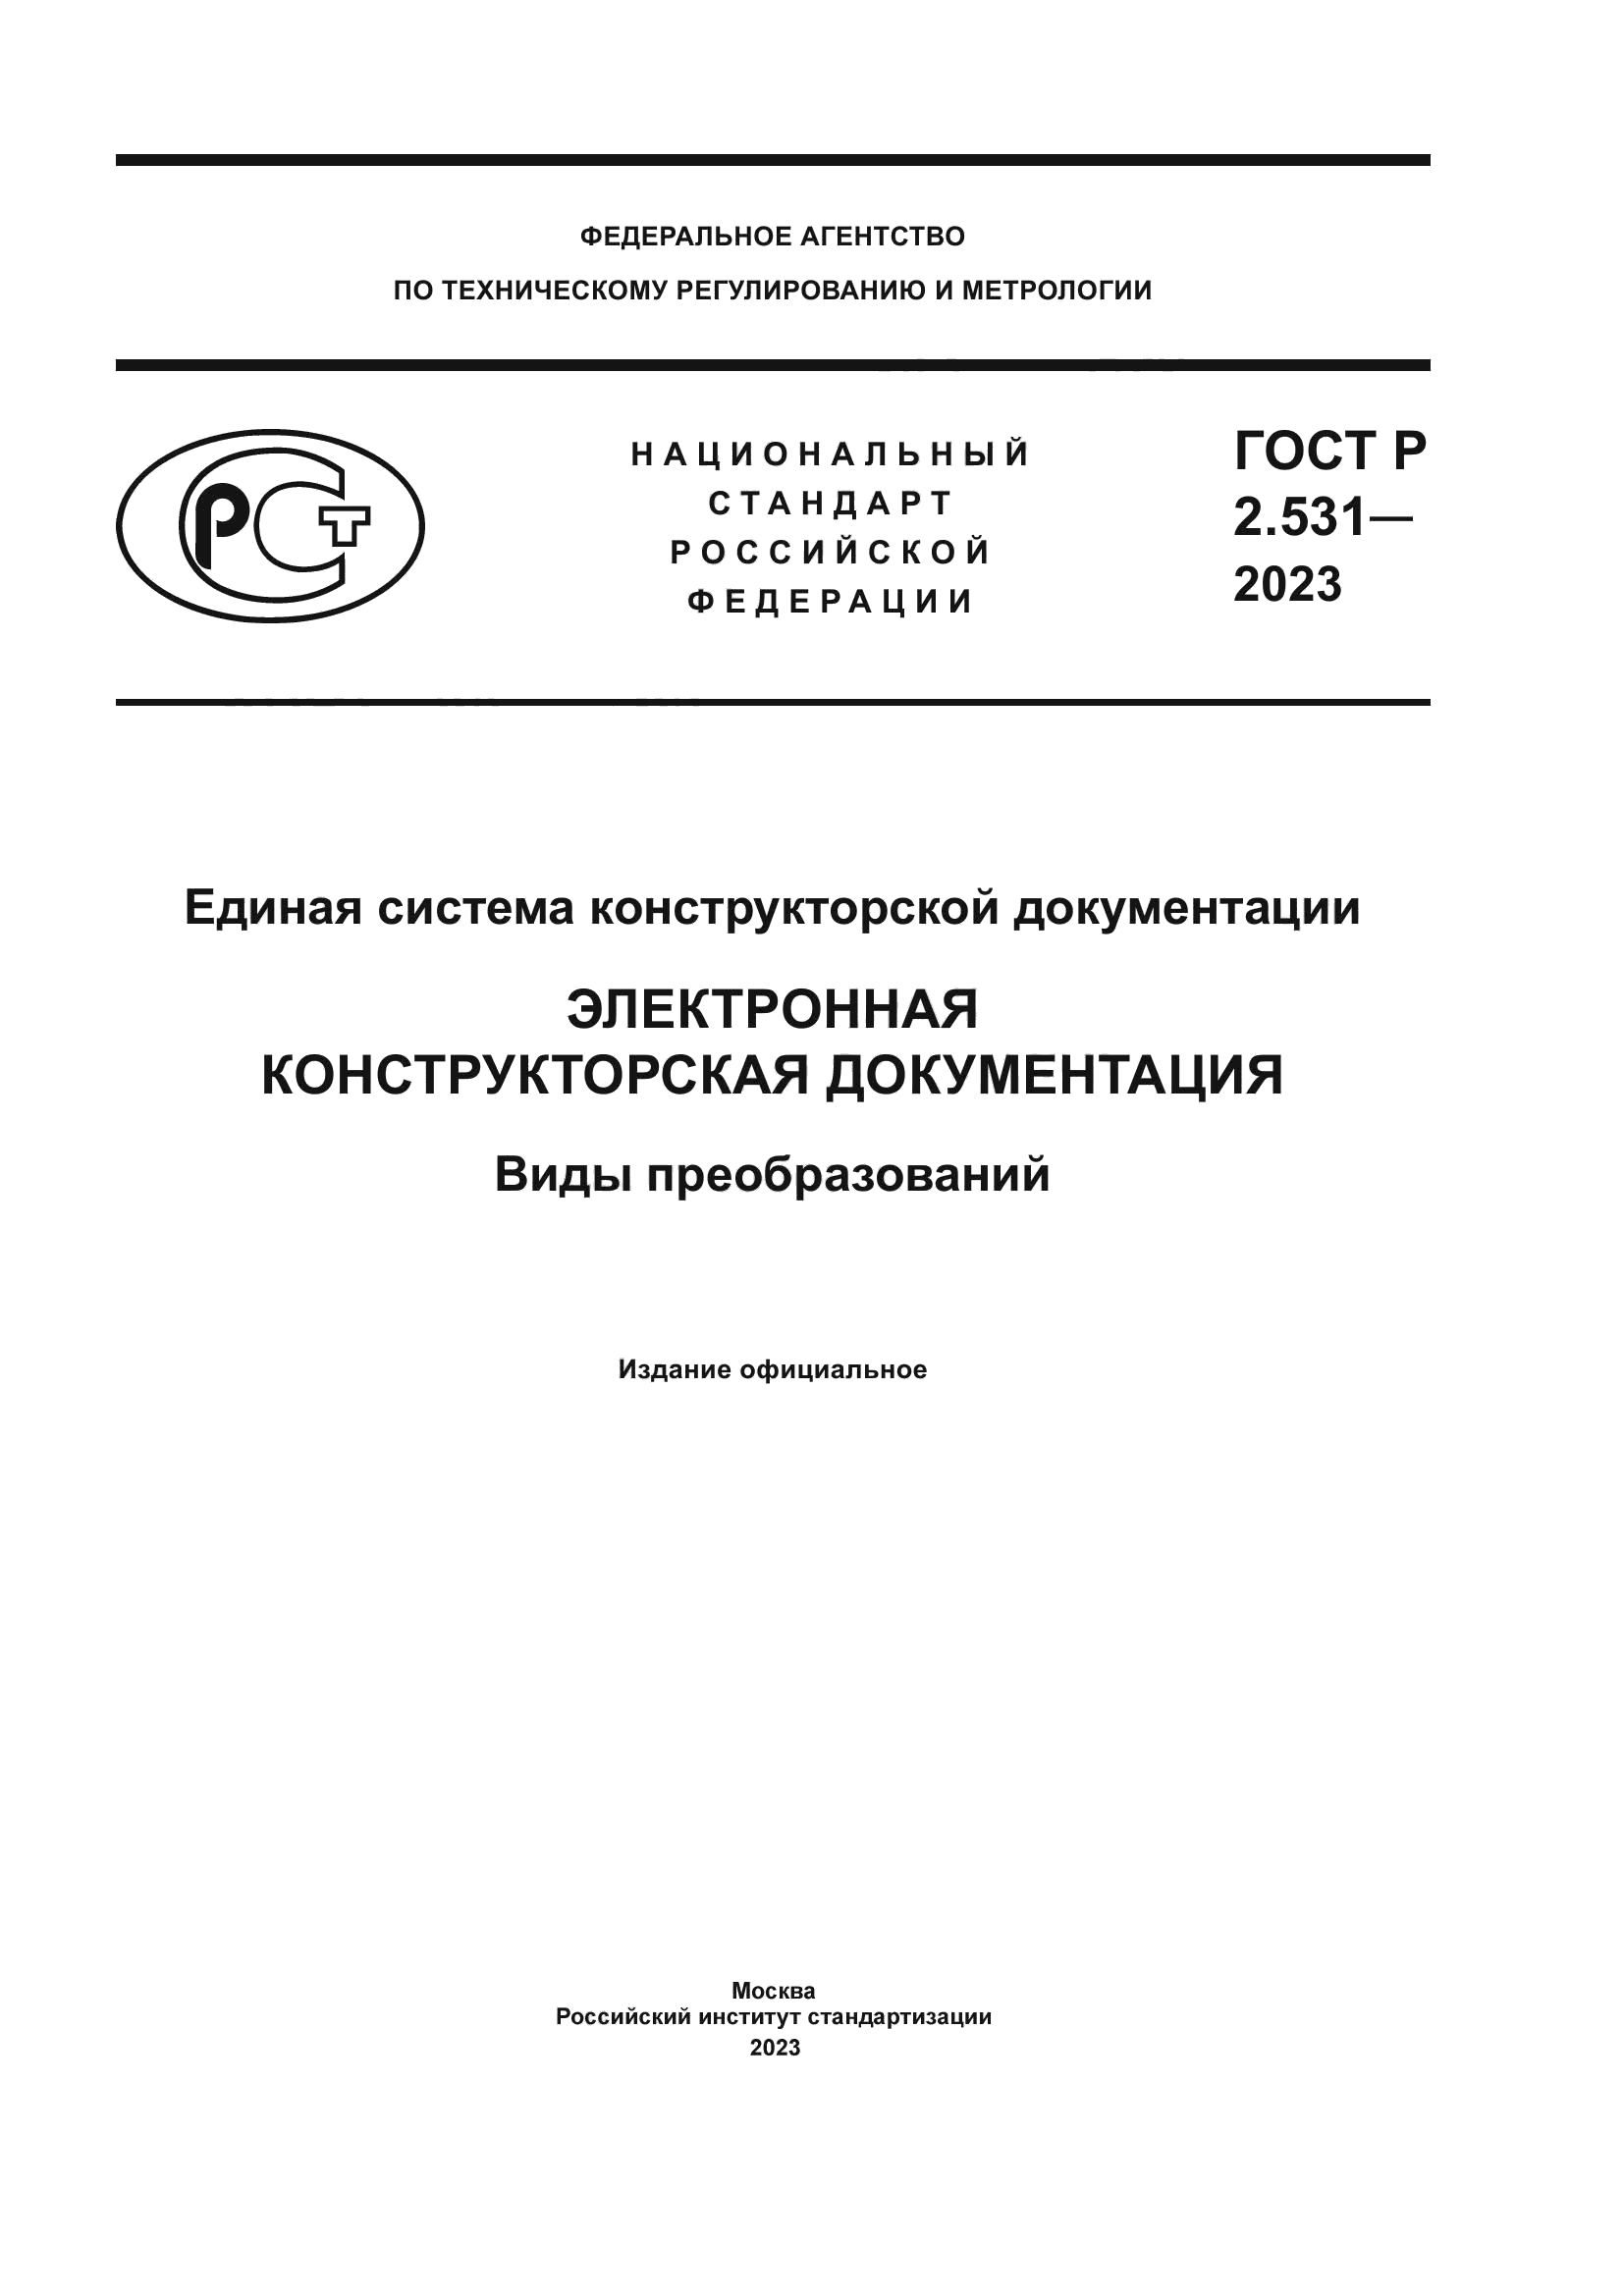 ГОСТ Р 2.531-2023